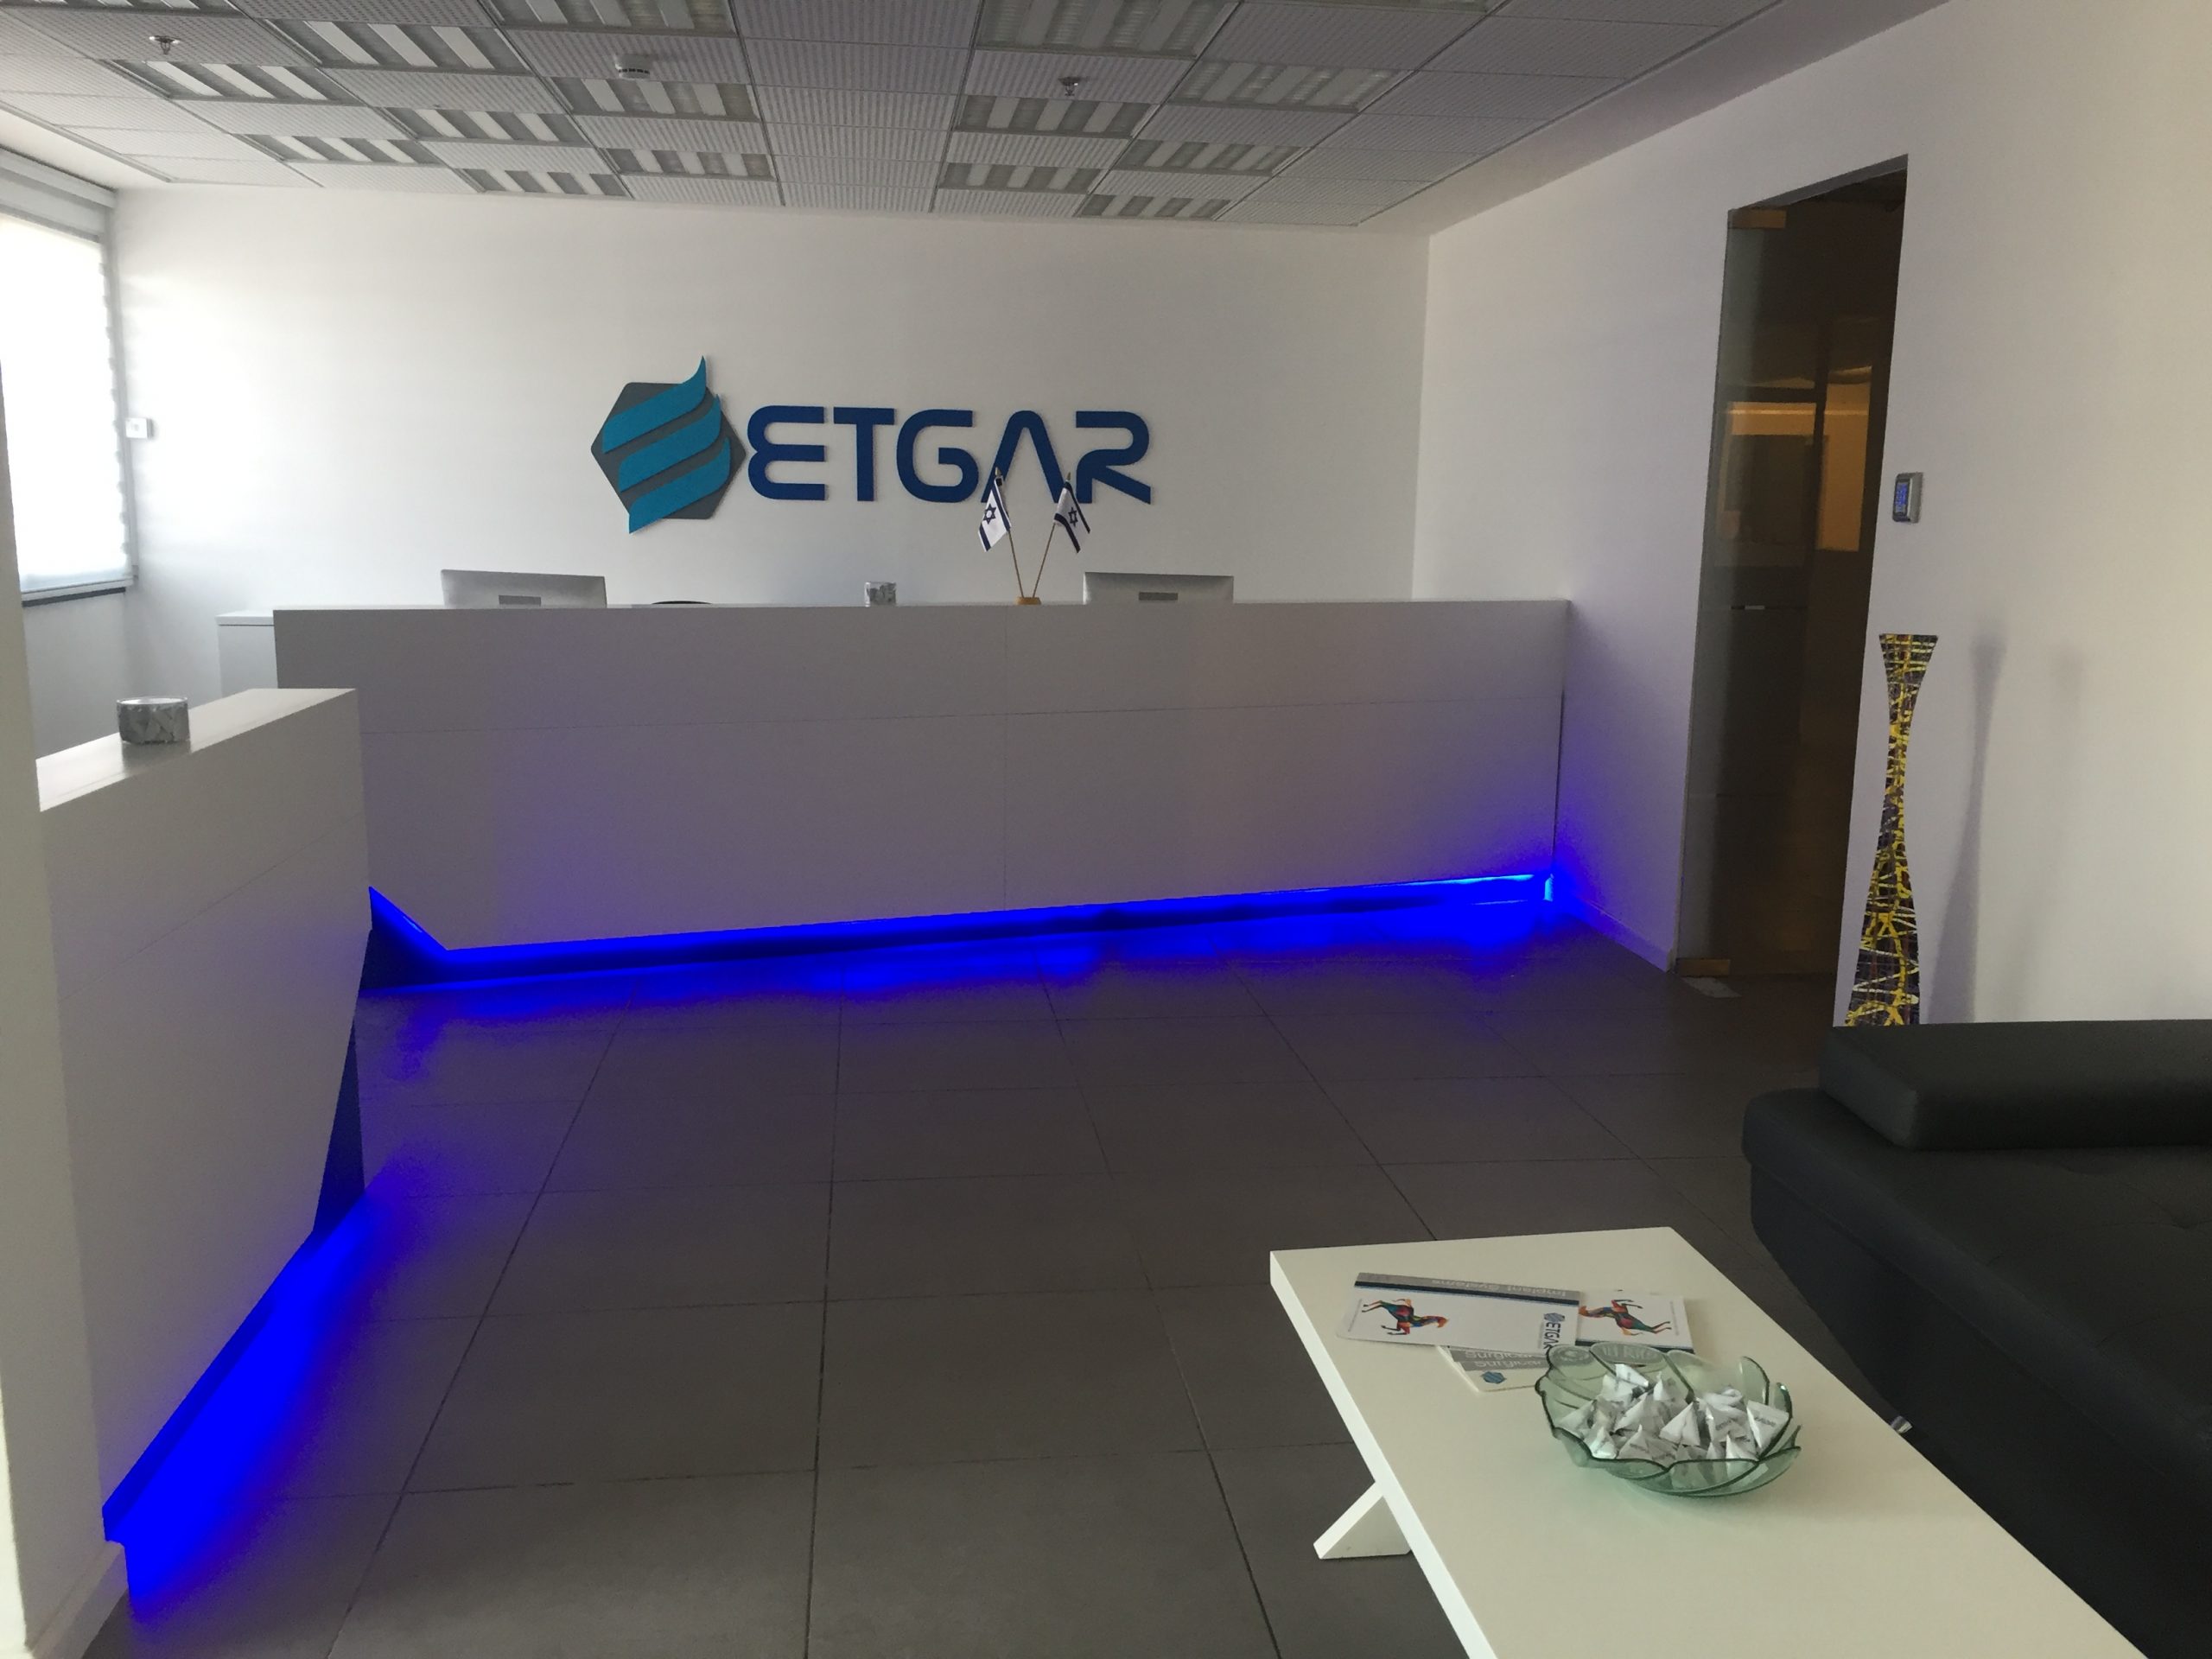 etgar-implants_03-scaled-1.jpg